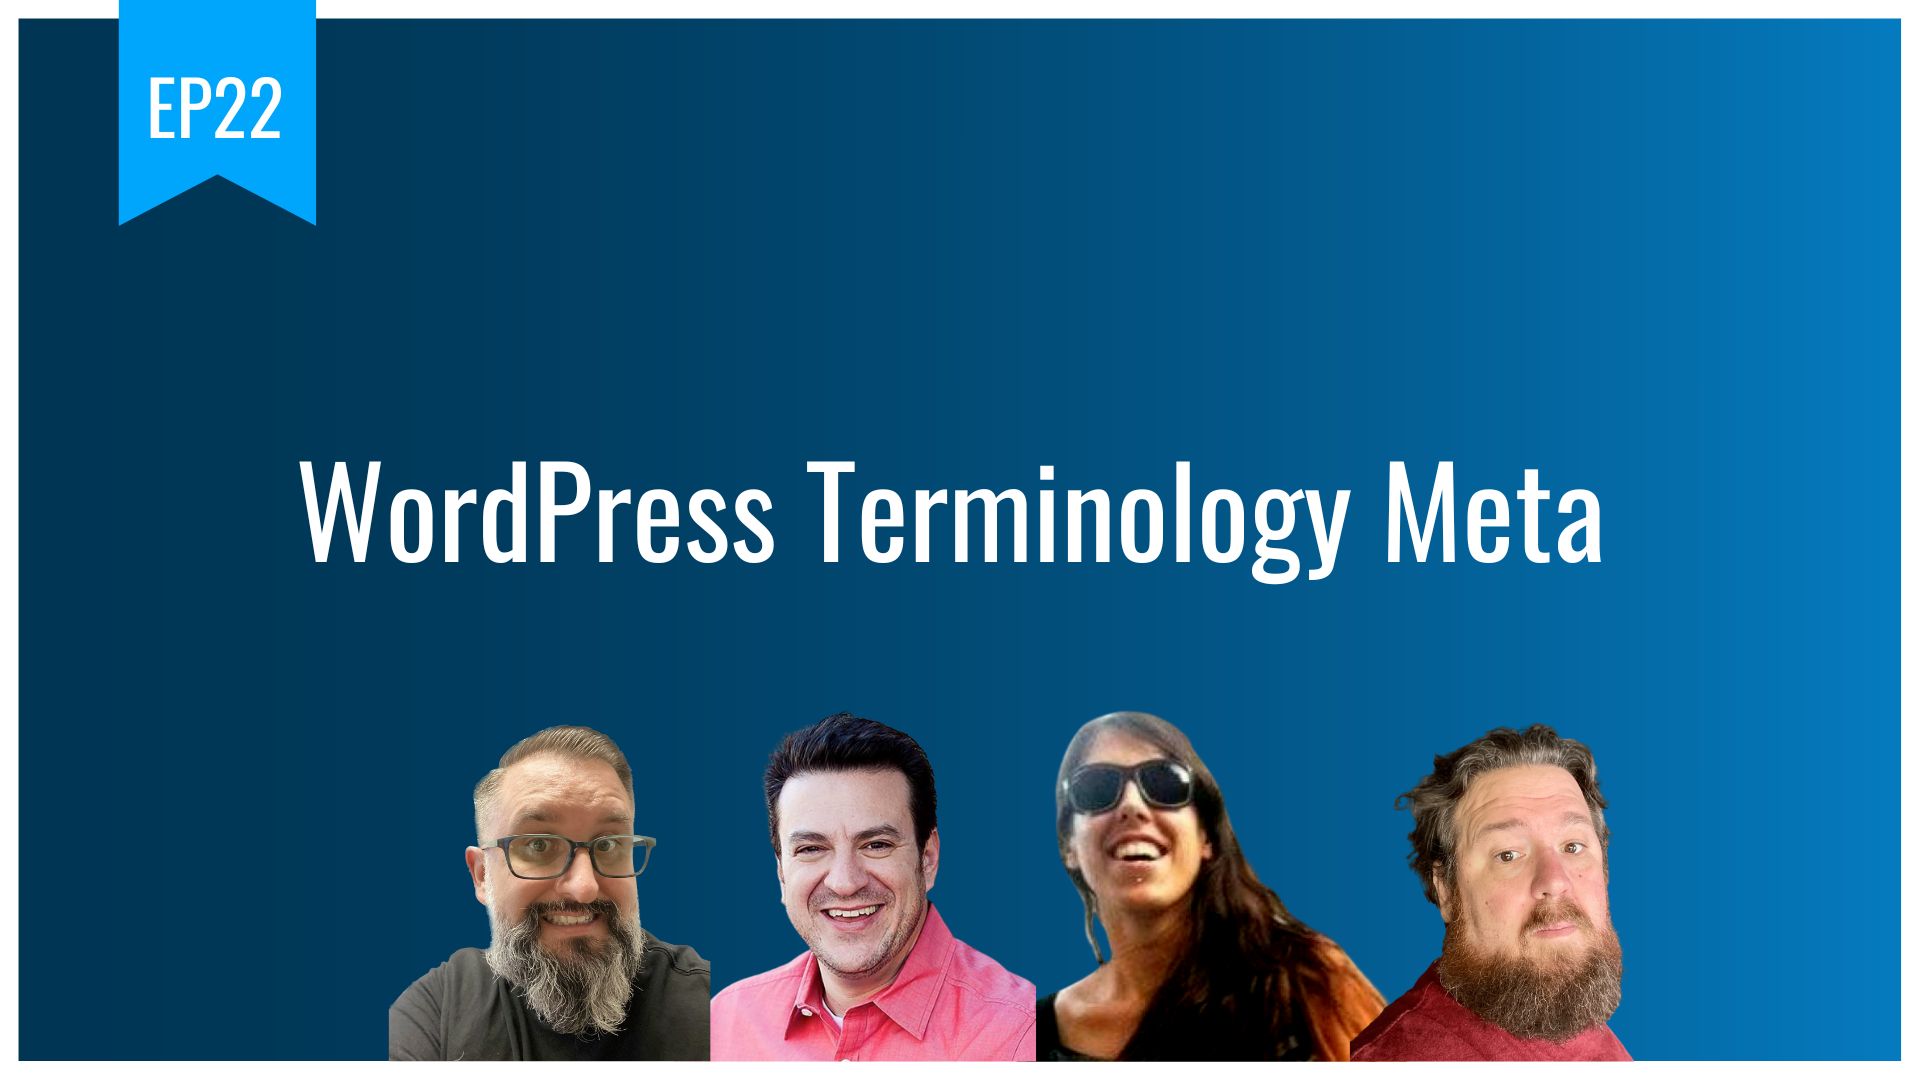 EP22 – WordPress Terminology Meta